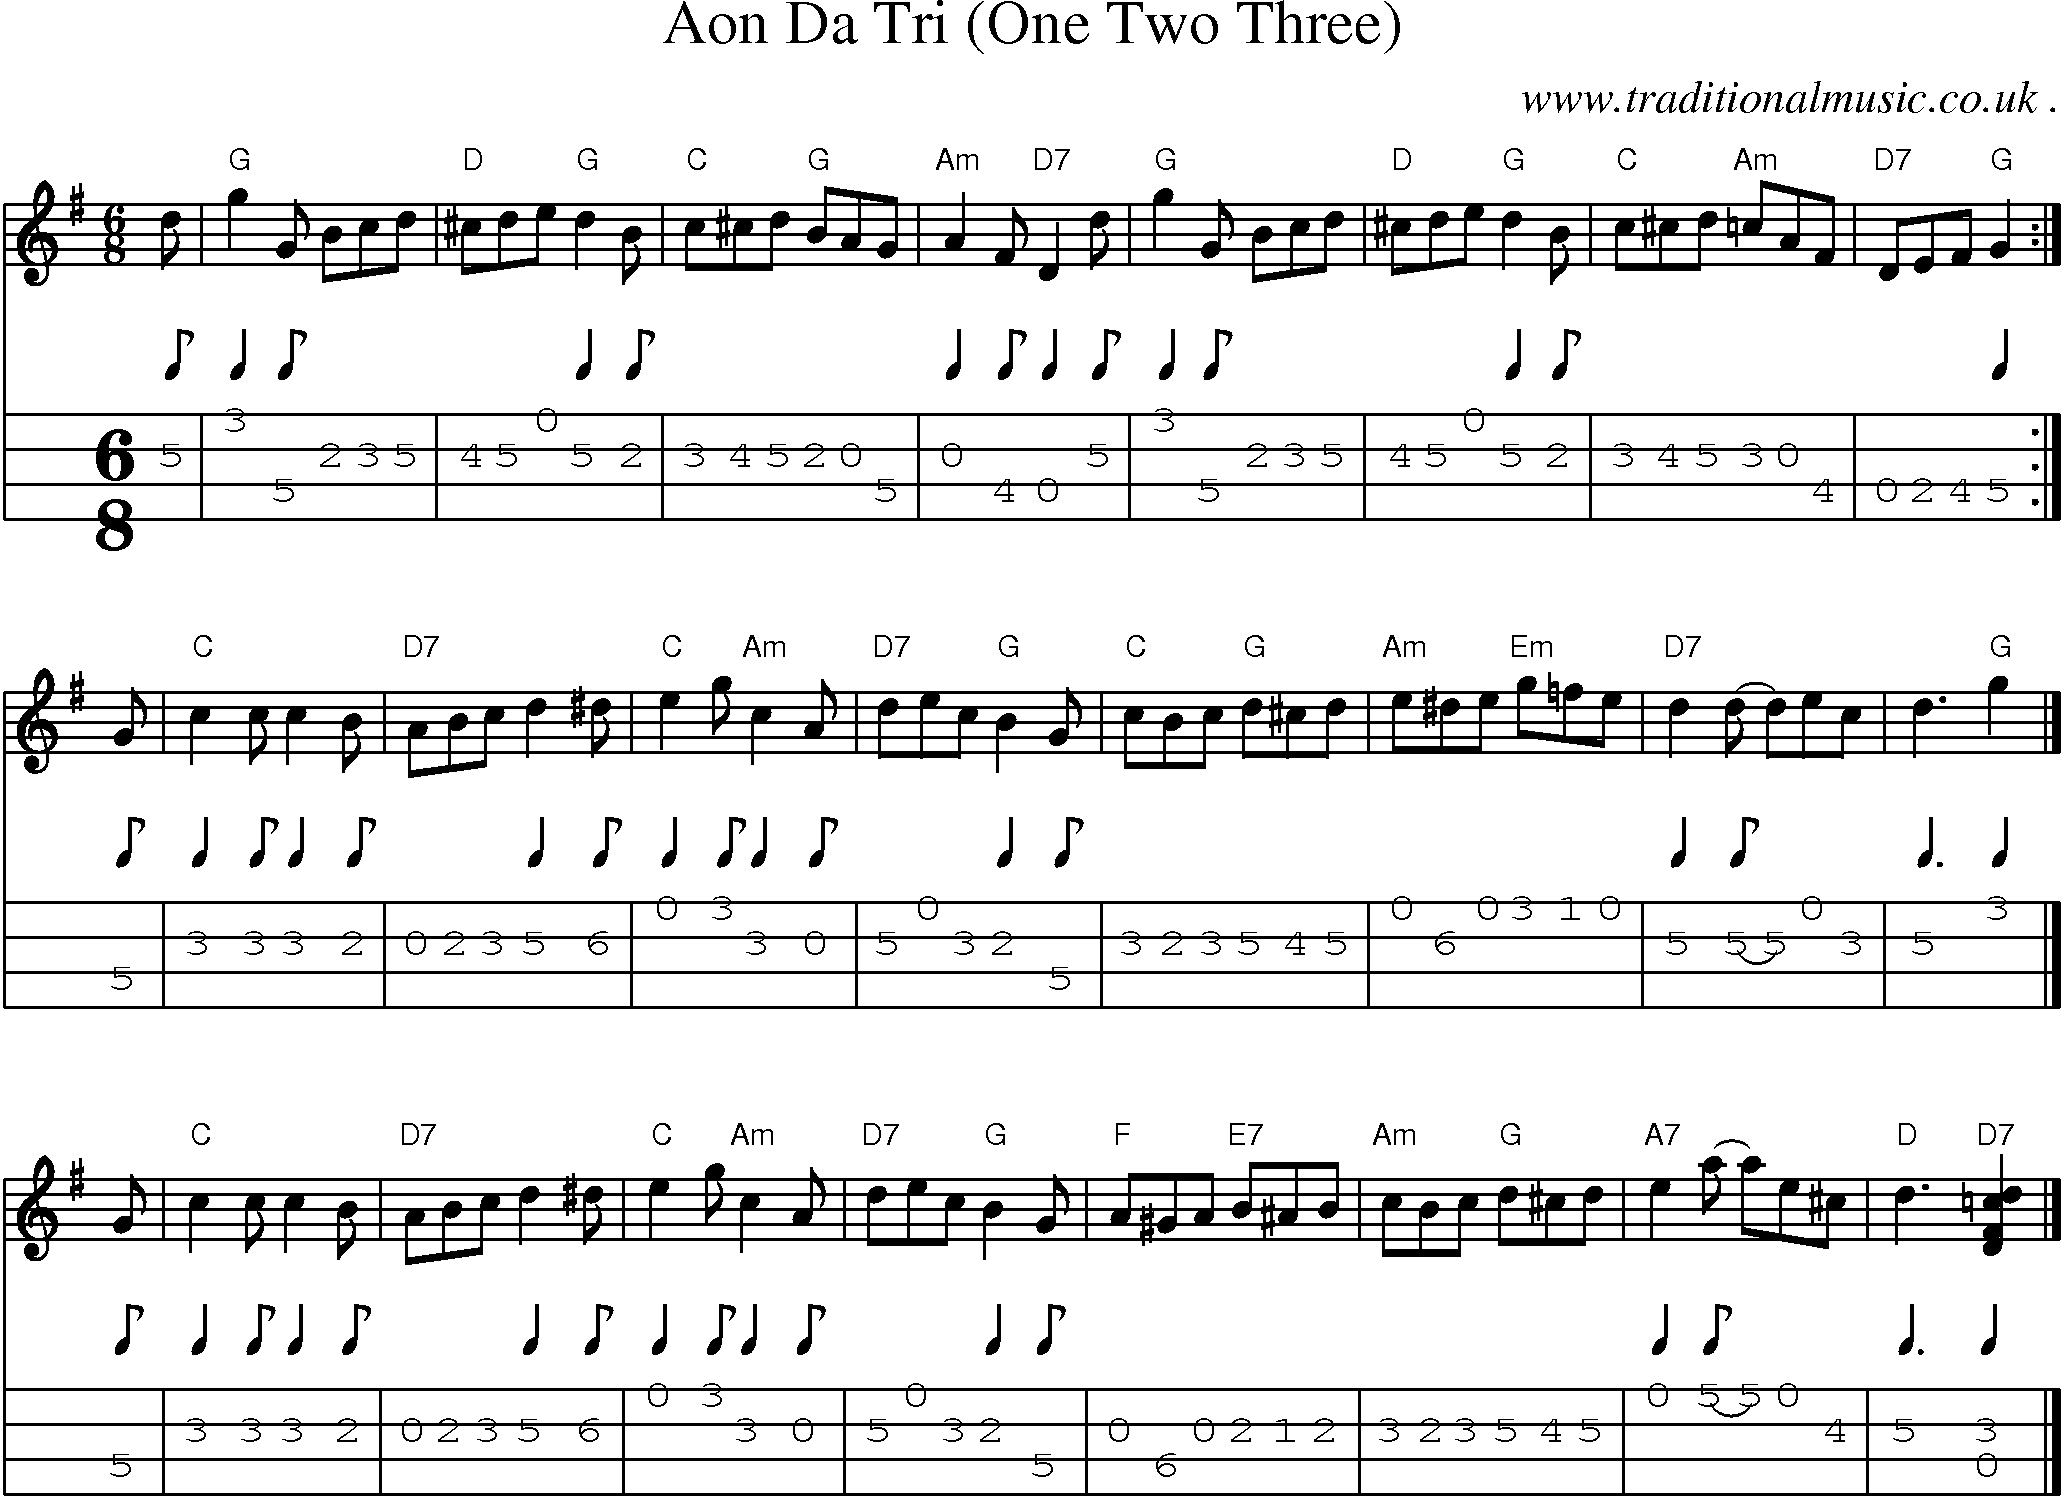 Sheet-music  score, Chords and Mandolin Tabs for Aon Da Tri One Two Three